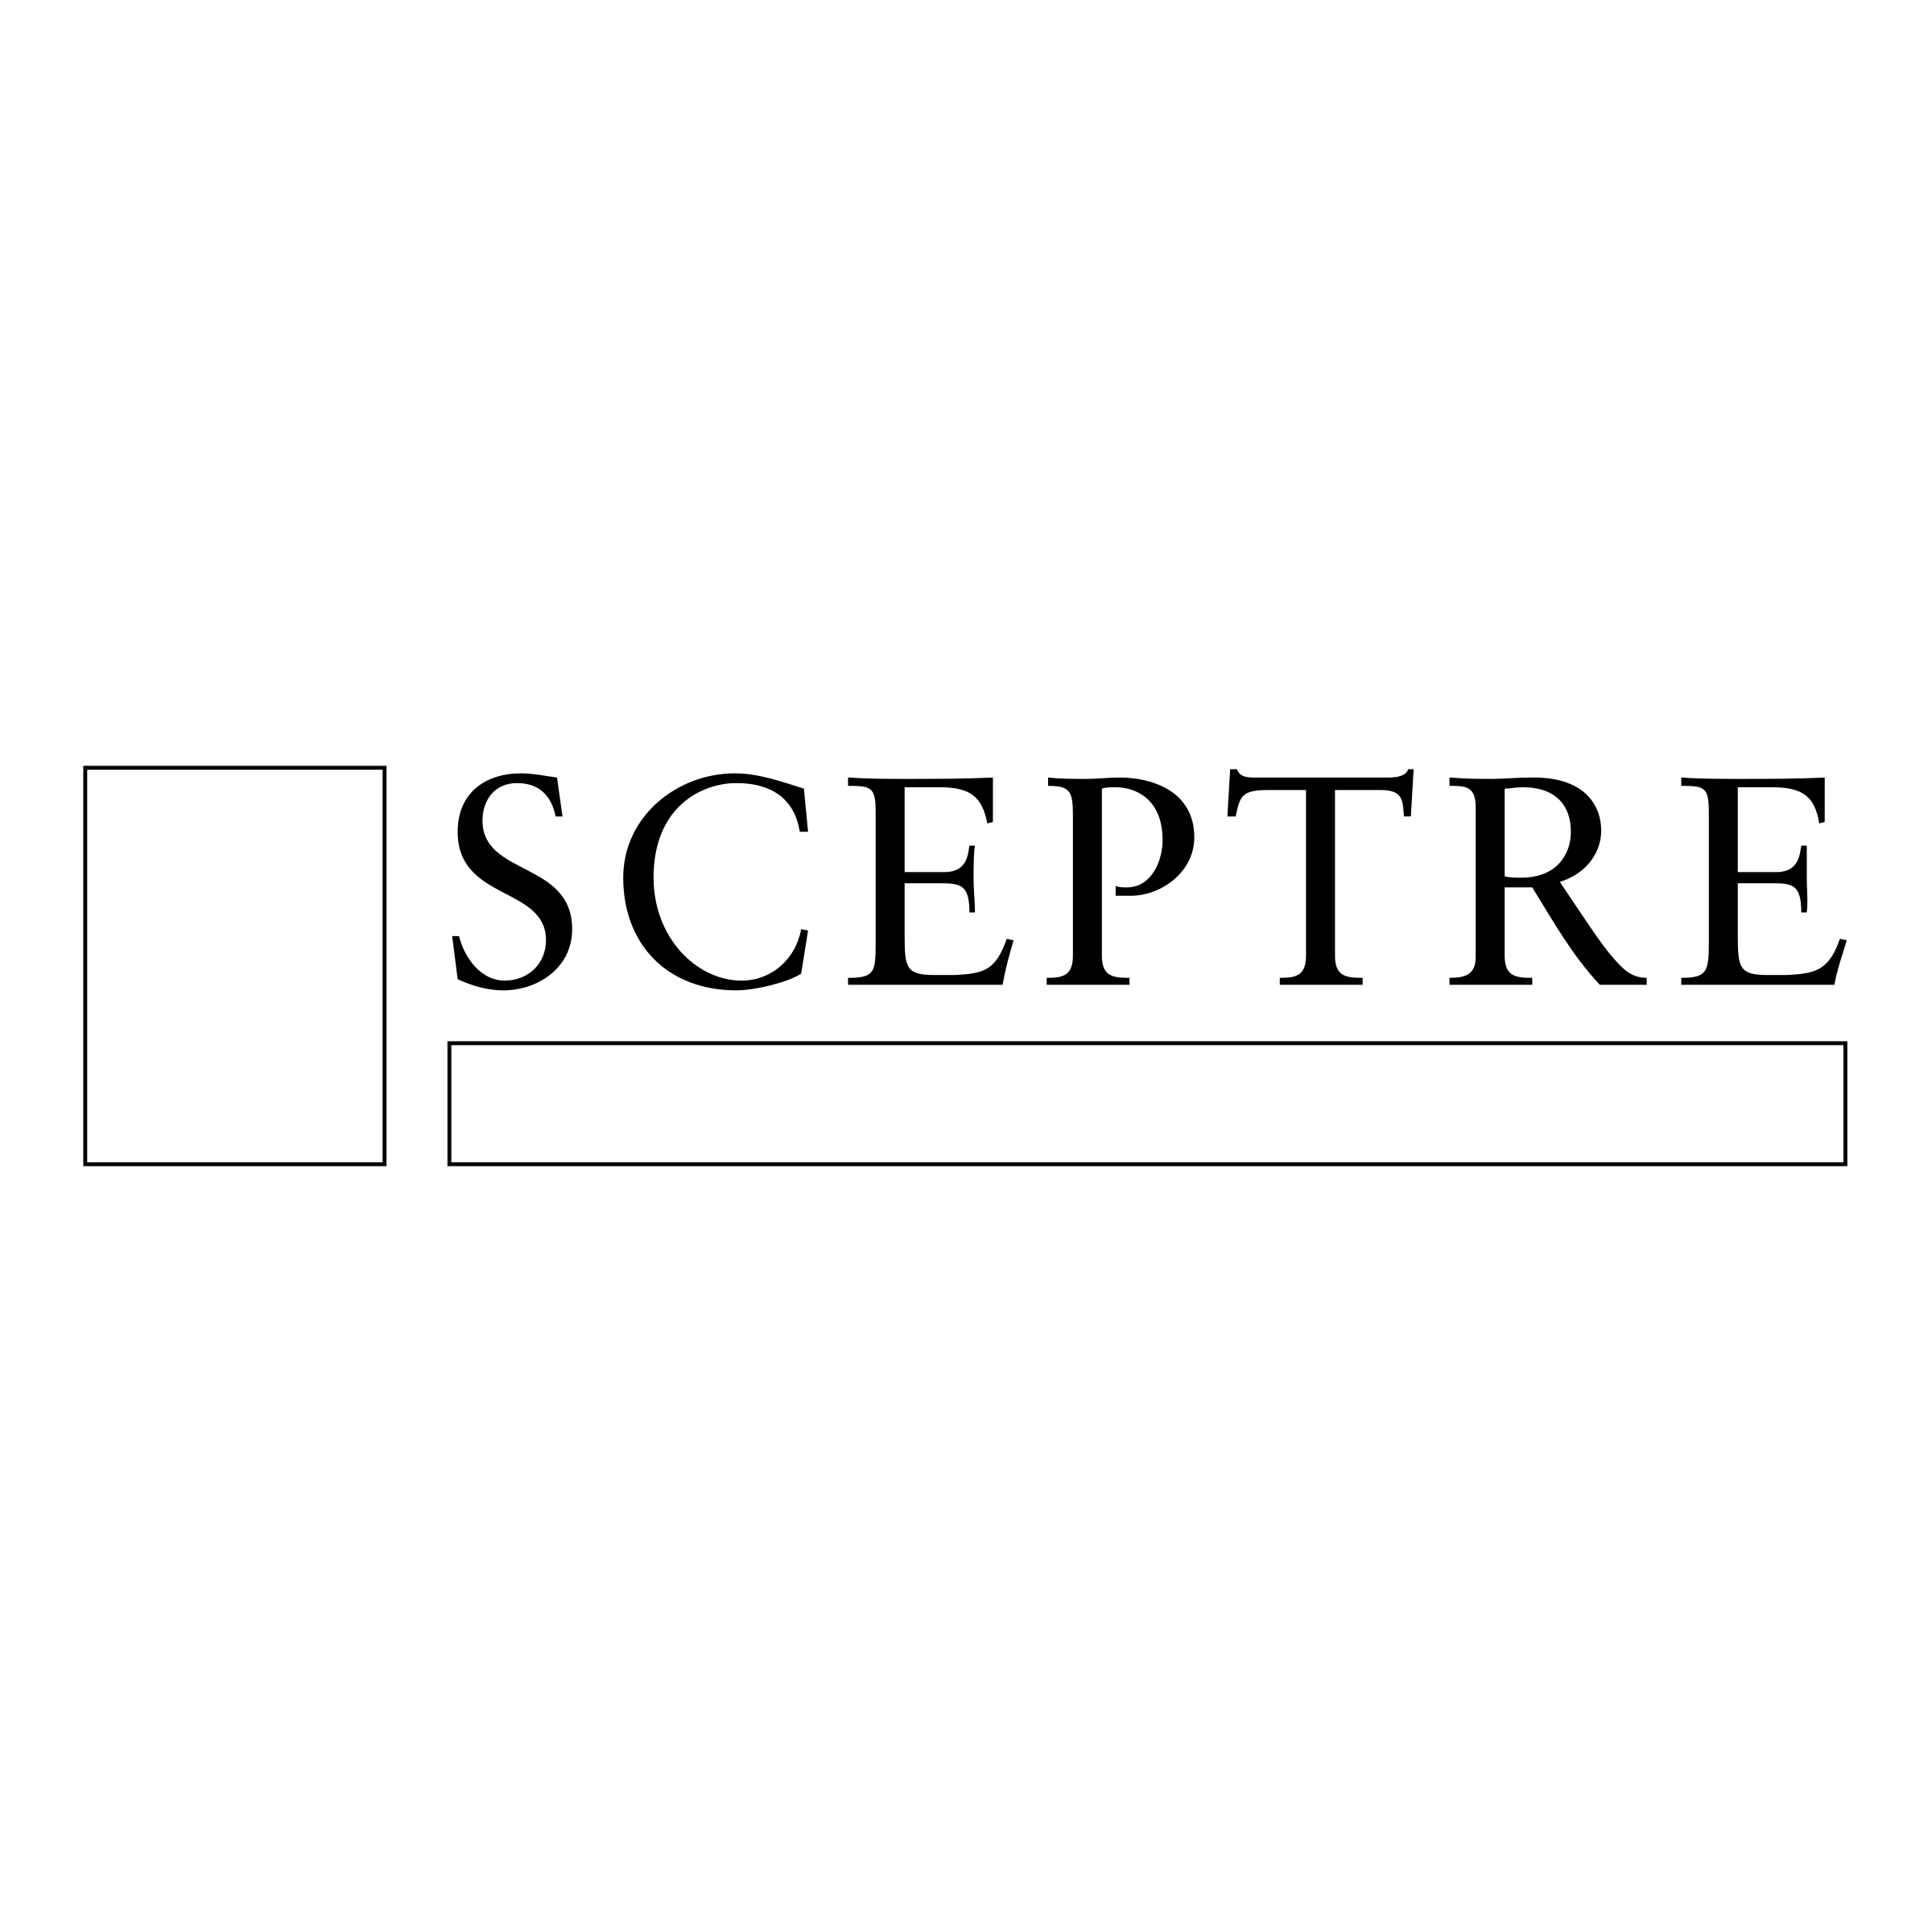 Sceptre Logo - Sceptre Logo PNG Transparent & SVG Vector - Freebie Supply